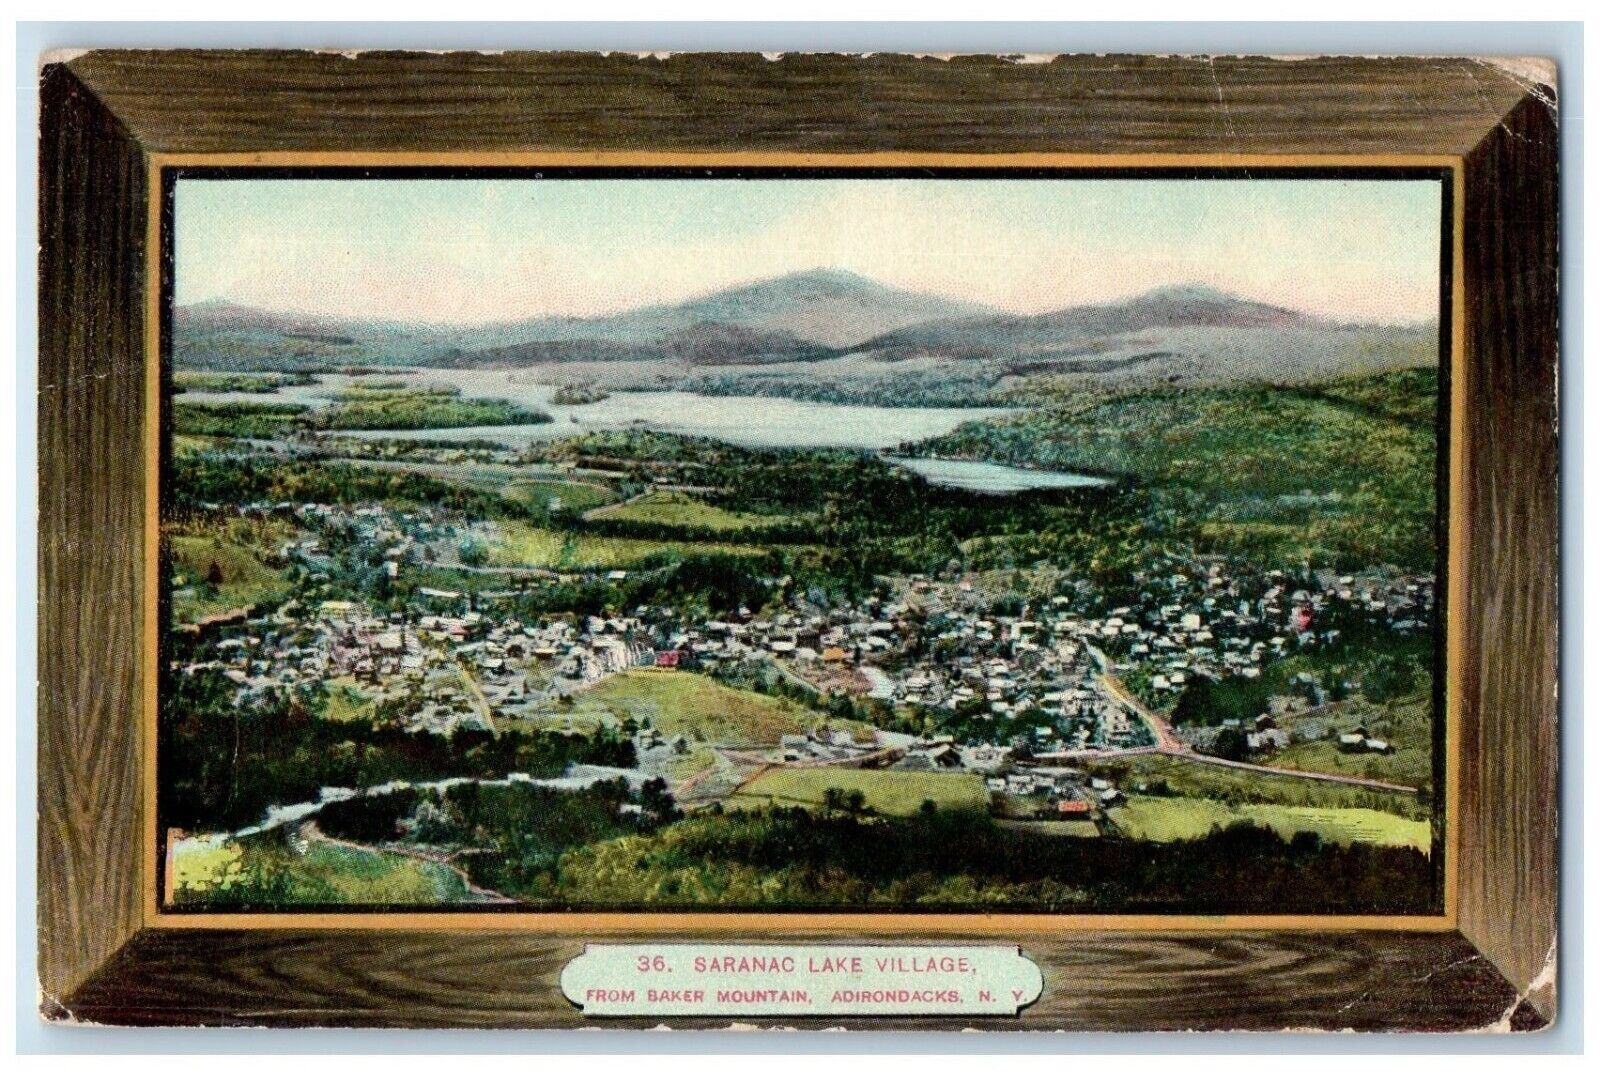 1915 Saranac Lake Village Baker Mountain Adirondacks New York Vintage Postcard